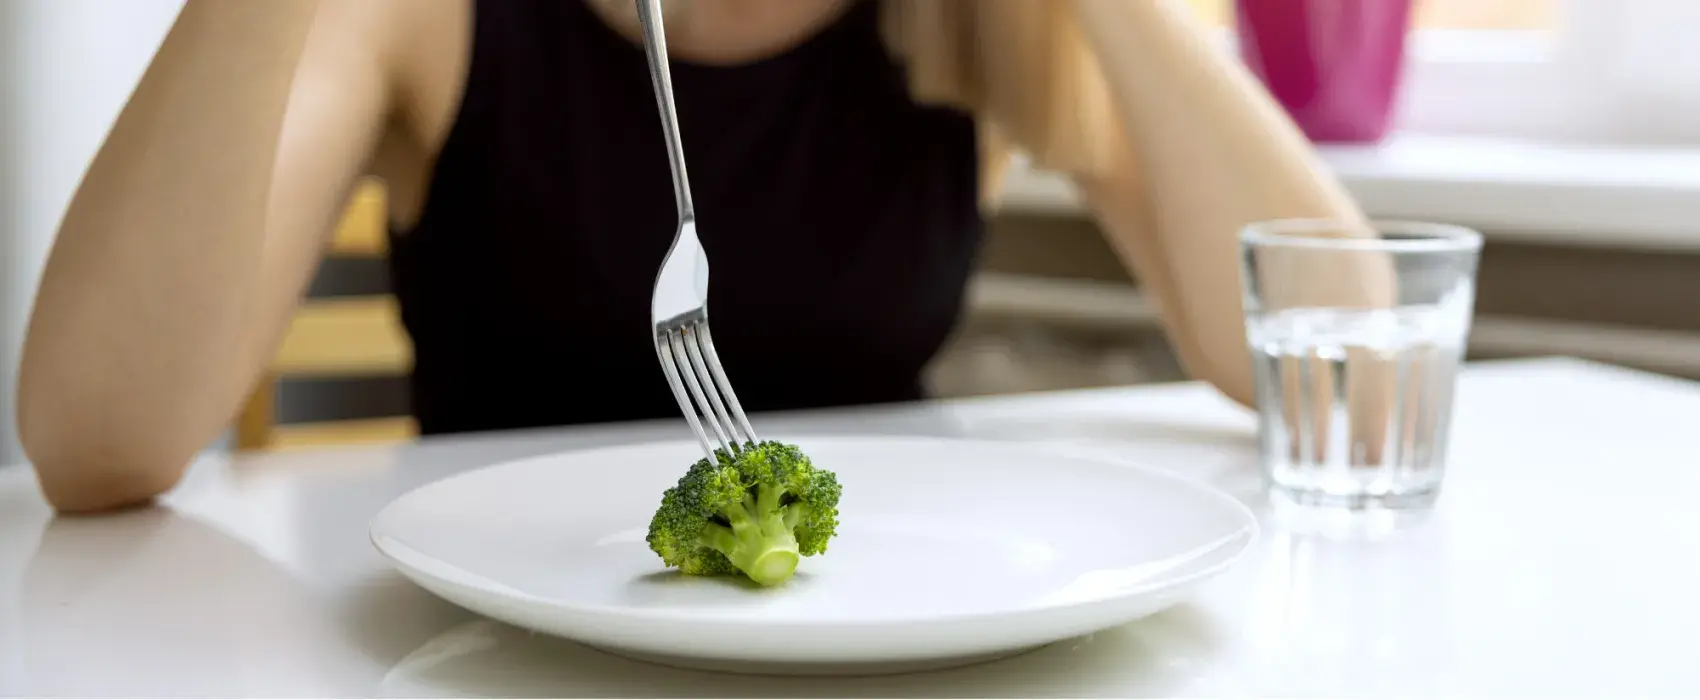 Single piece of broccoli on a plate